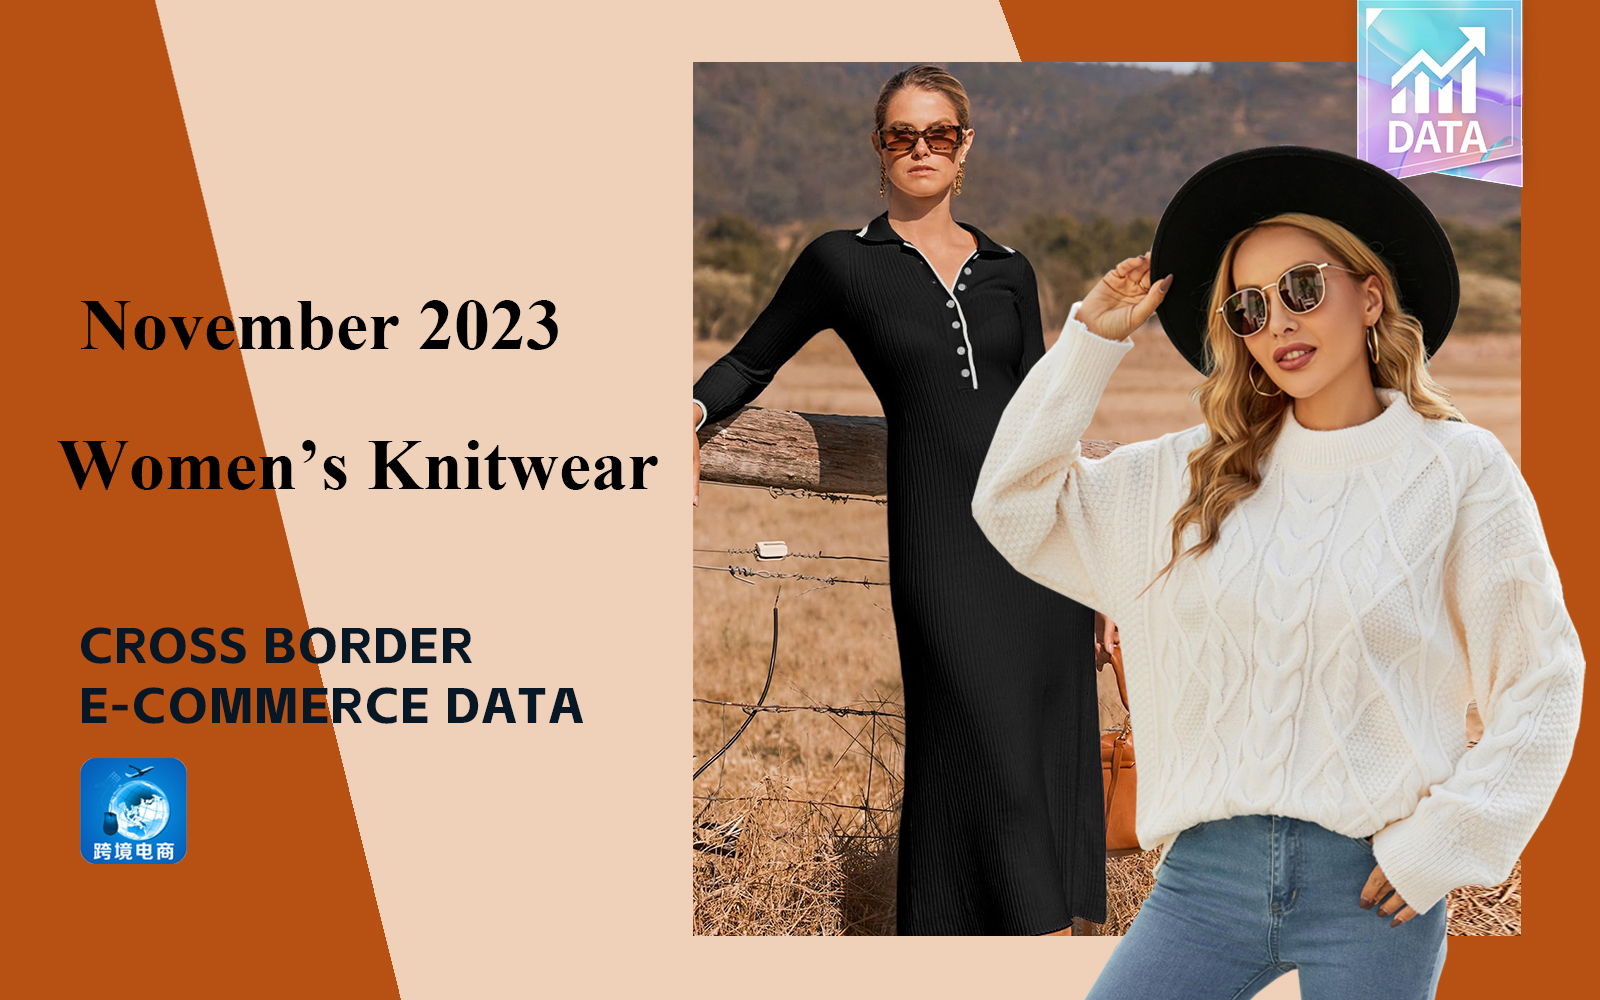 Amazon -- Cross border E-commerce Data Analysis of Women's Knitwear in November